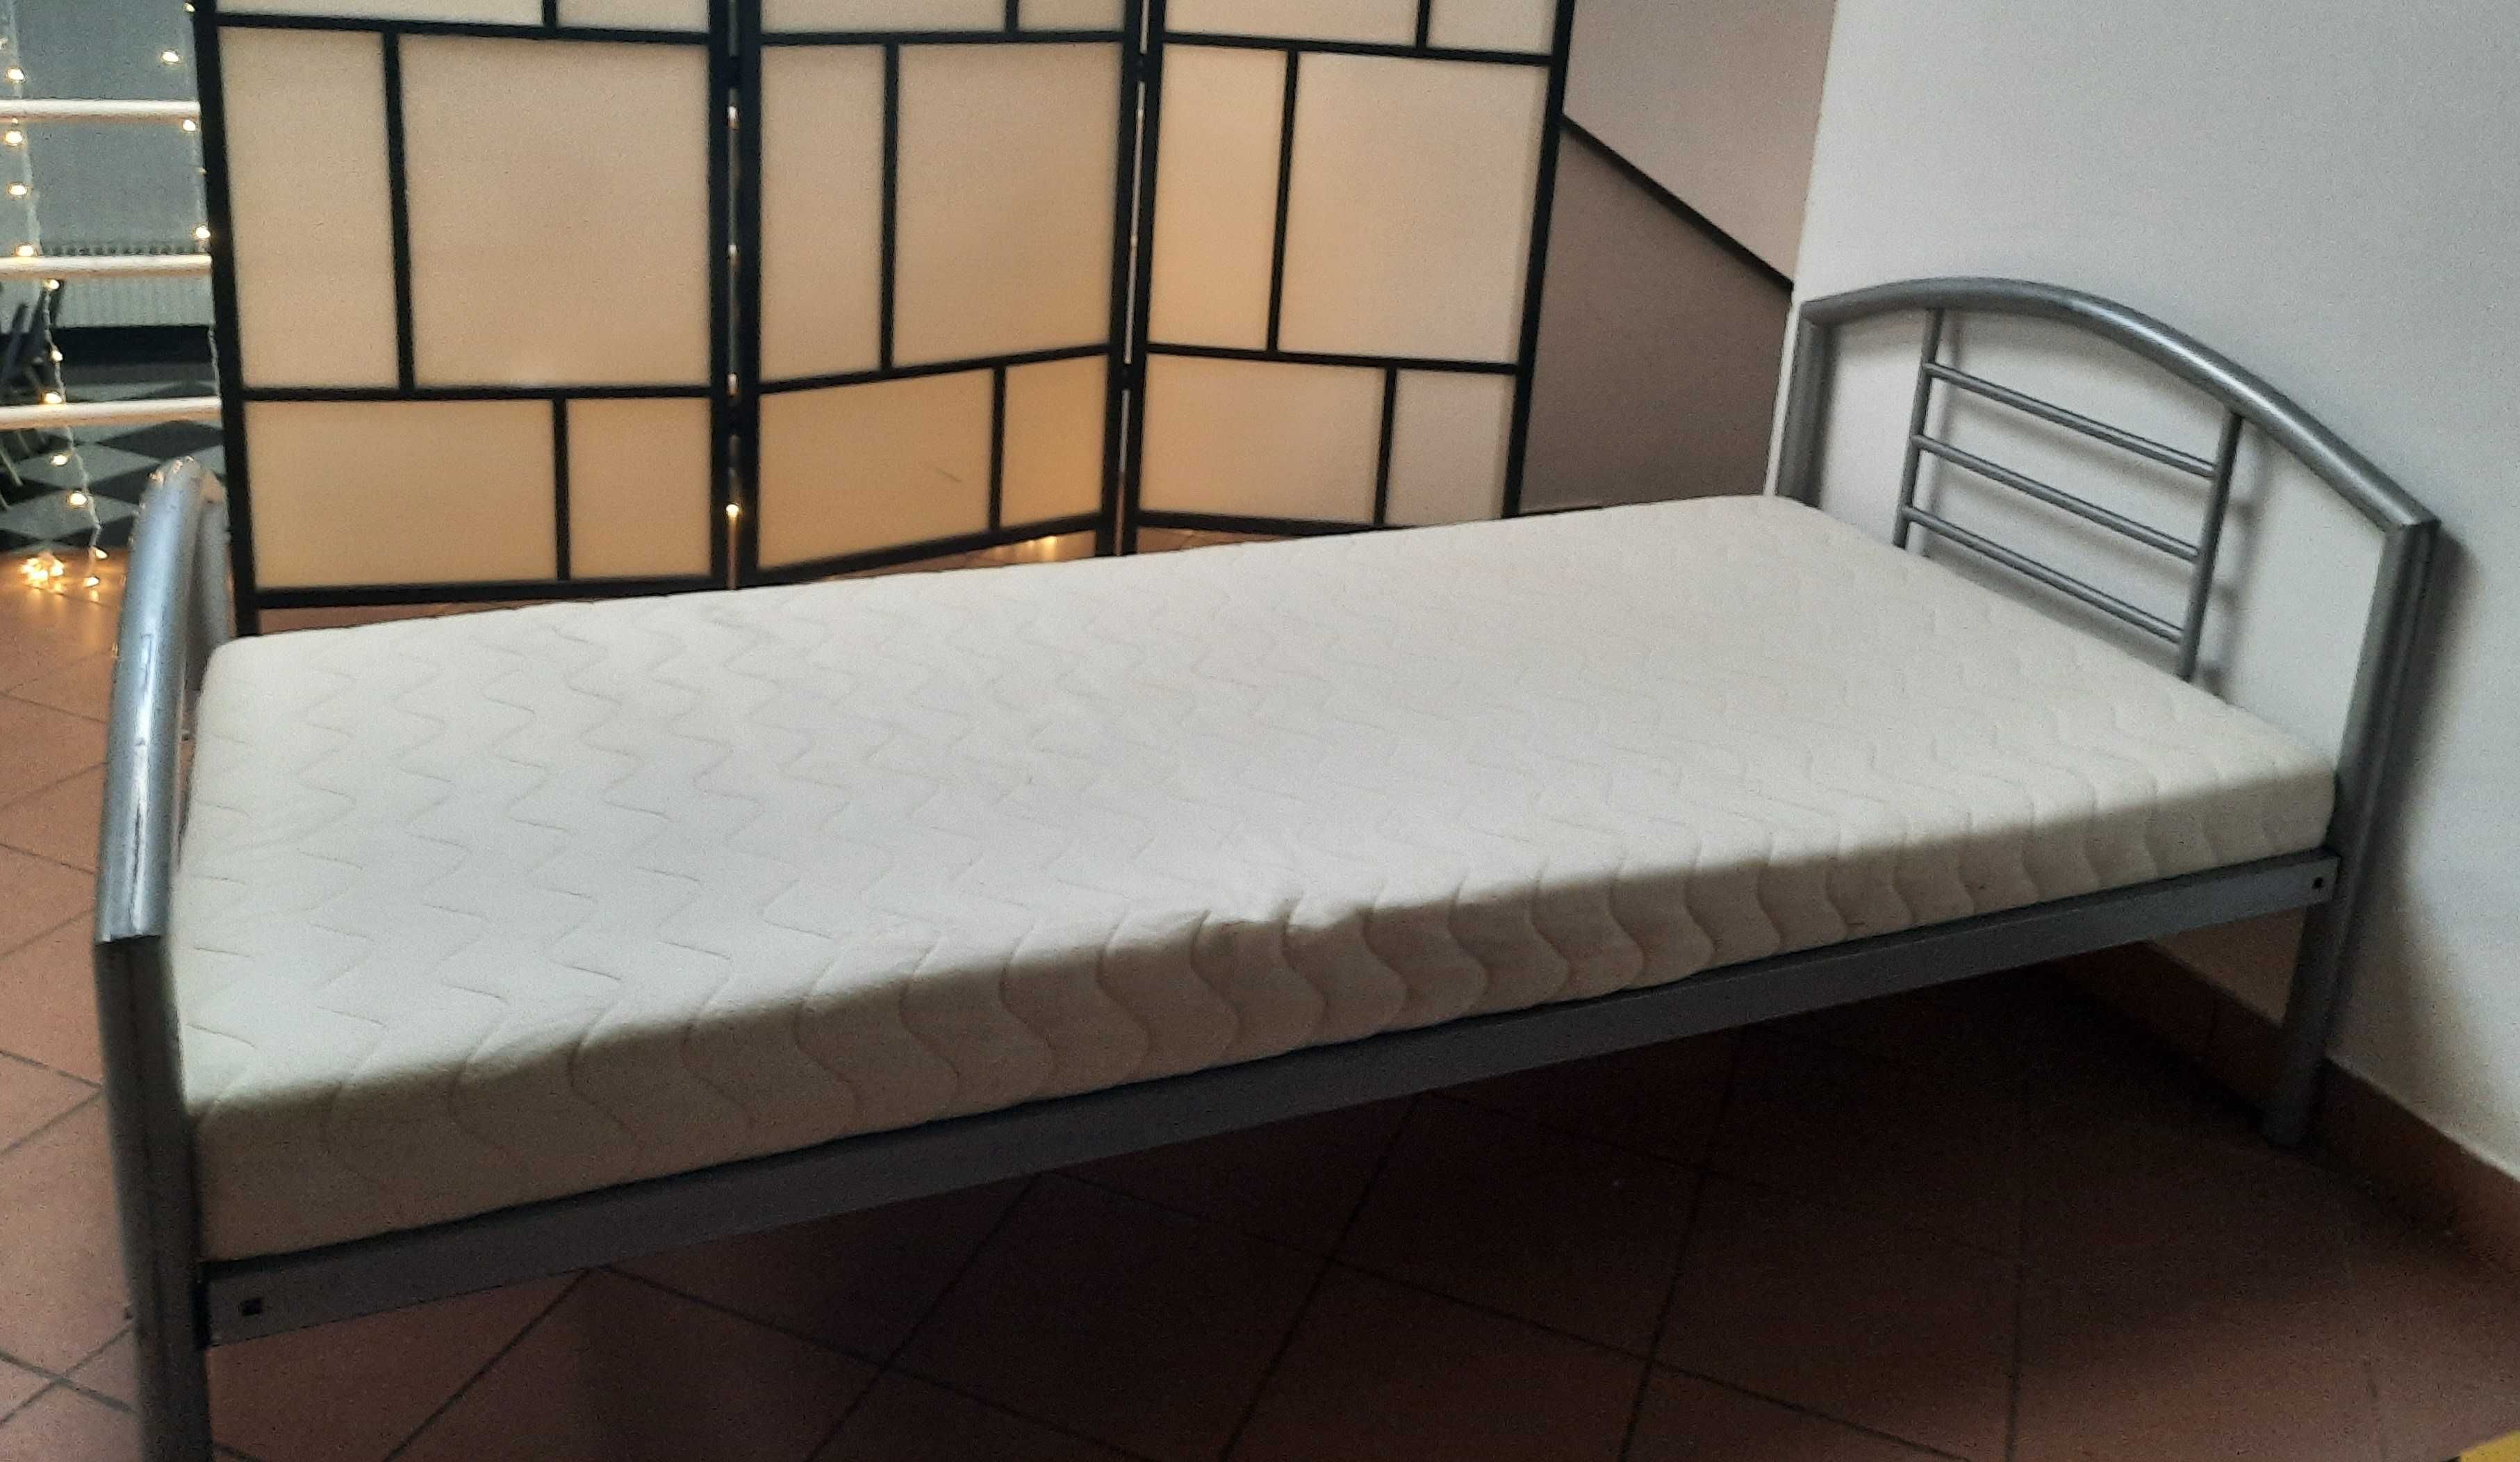 Łóżka metalowe z materacem 90x200